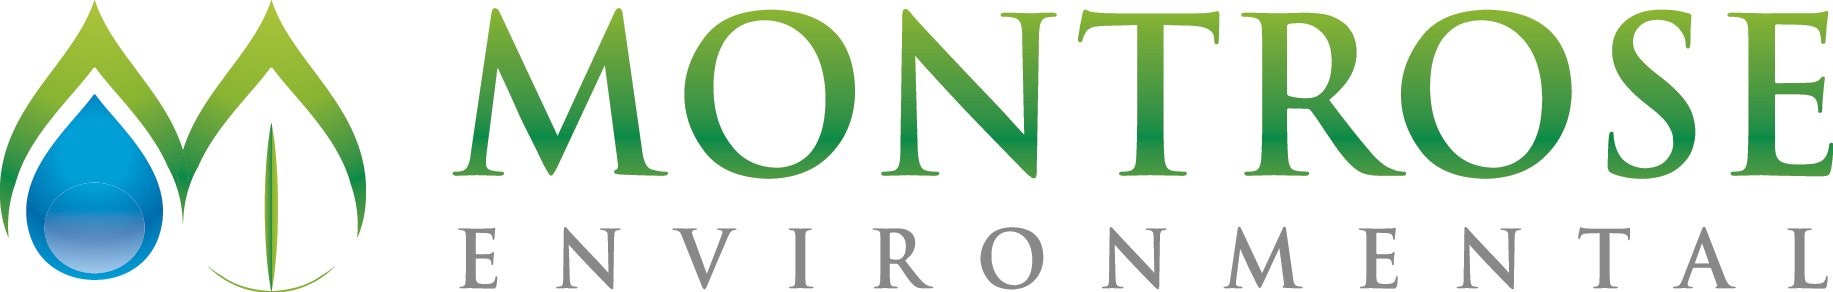 Montrose-Environmental-Logo_-Horizontal_Full-Color.jpg